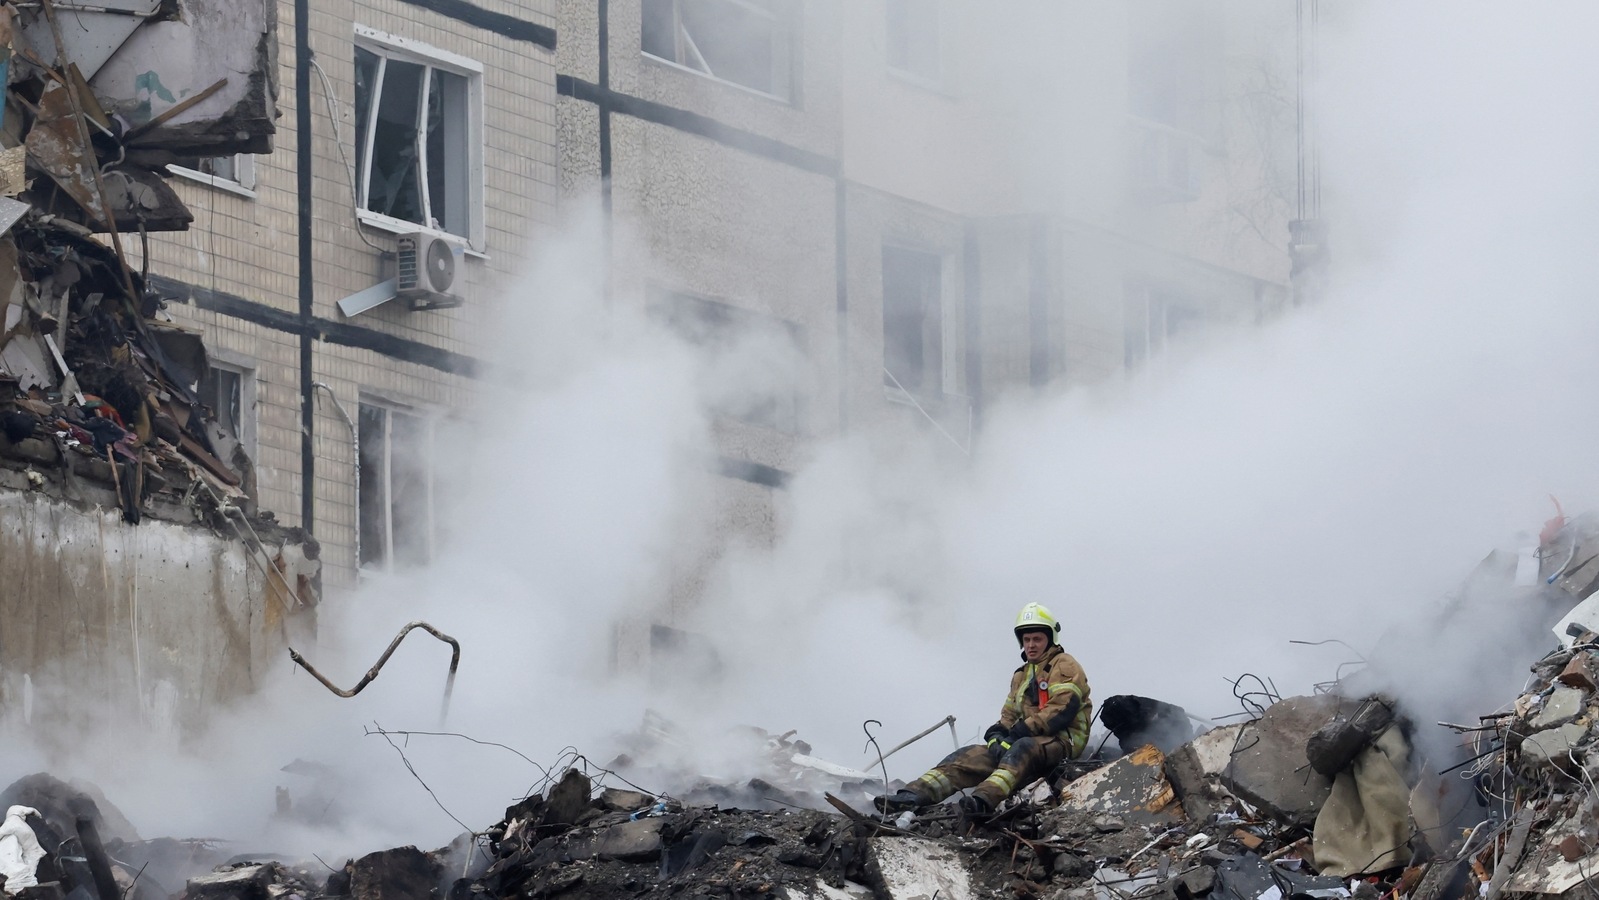 Canada summons Russian ambassador over attacks on civilians in Ukraine